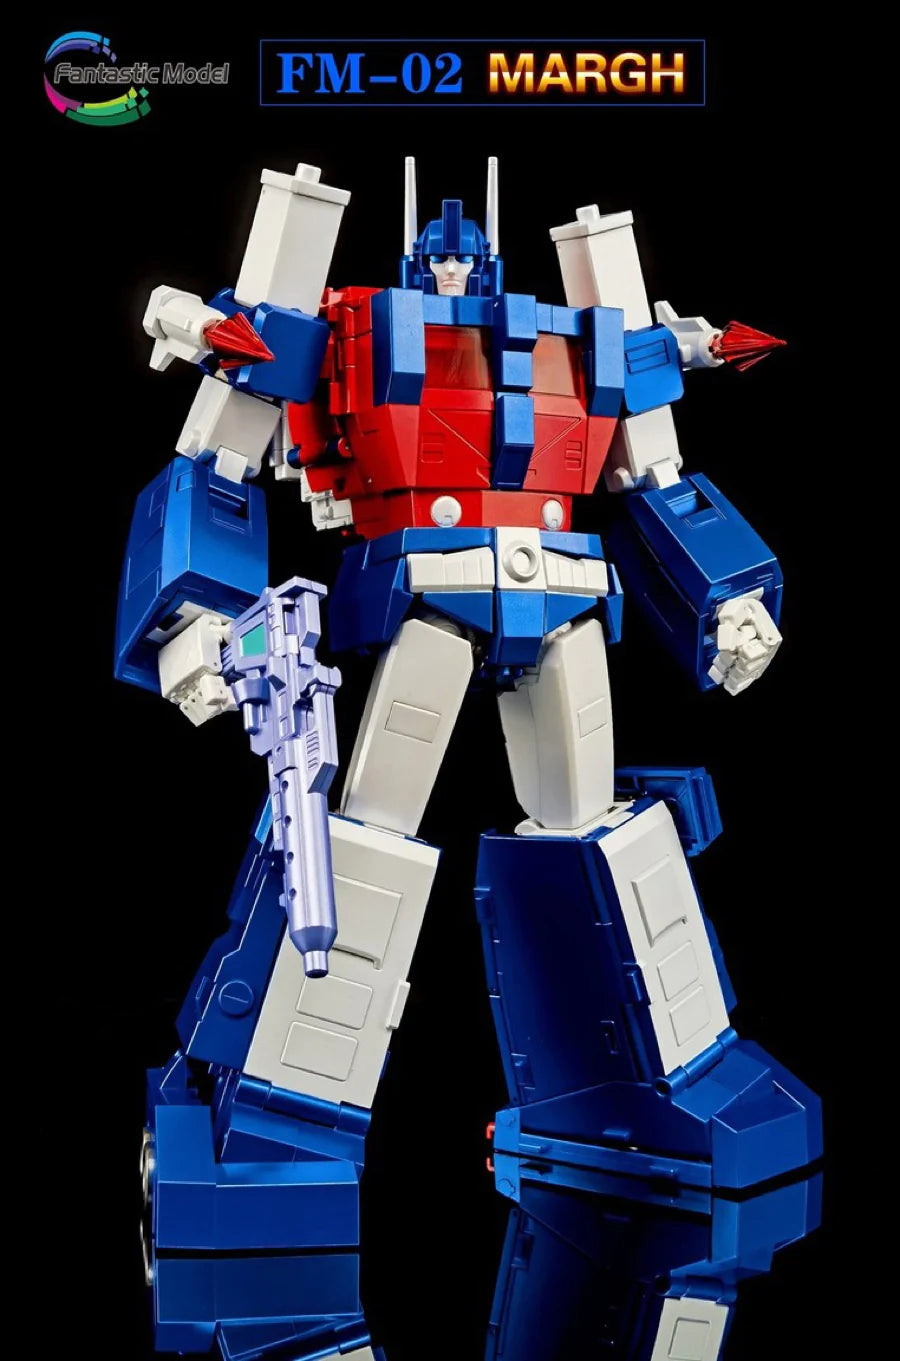 Transformers Fantastic Model FM-02 (Fans Toys) Margh (Ultra Magnus) standing view